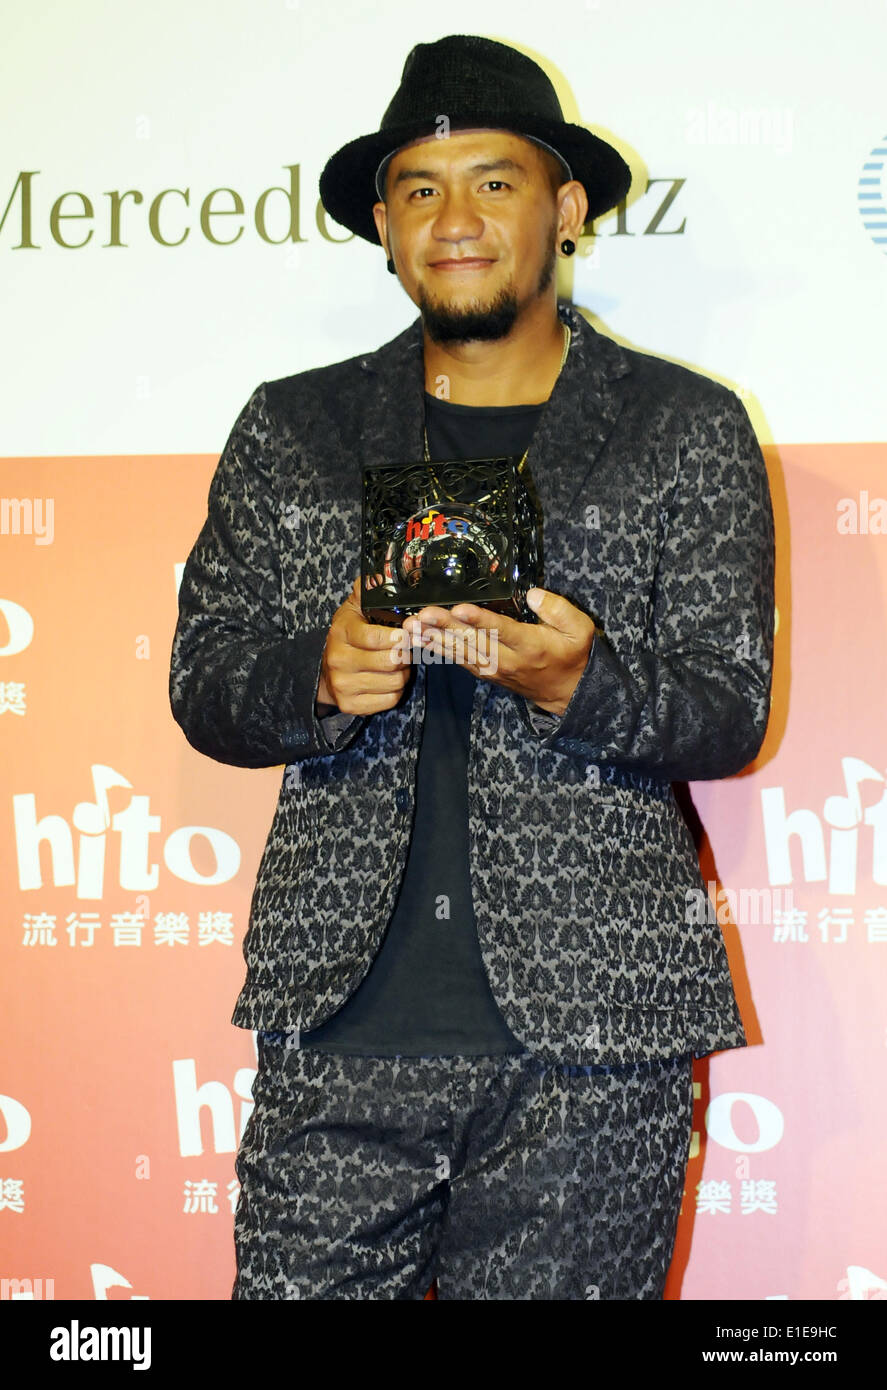 Taipei. 2nd June, 2014. Singer Chang Csun Yuk wins the hito Creative Singer during the awarding ceremony of 2014 hito Pop Music in Taipei, southeast China's Taiwan, June 1, 2014. © Xinhua/Alamy Live News Stock Photo